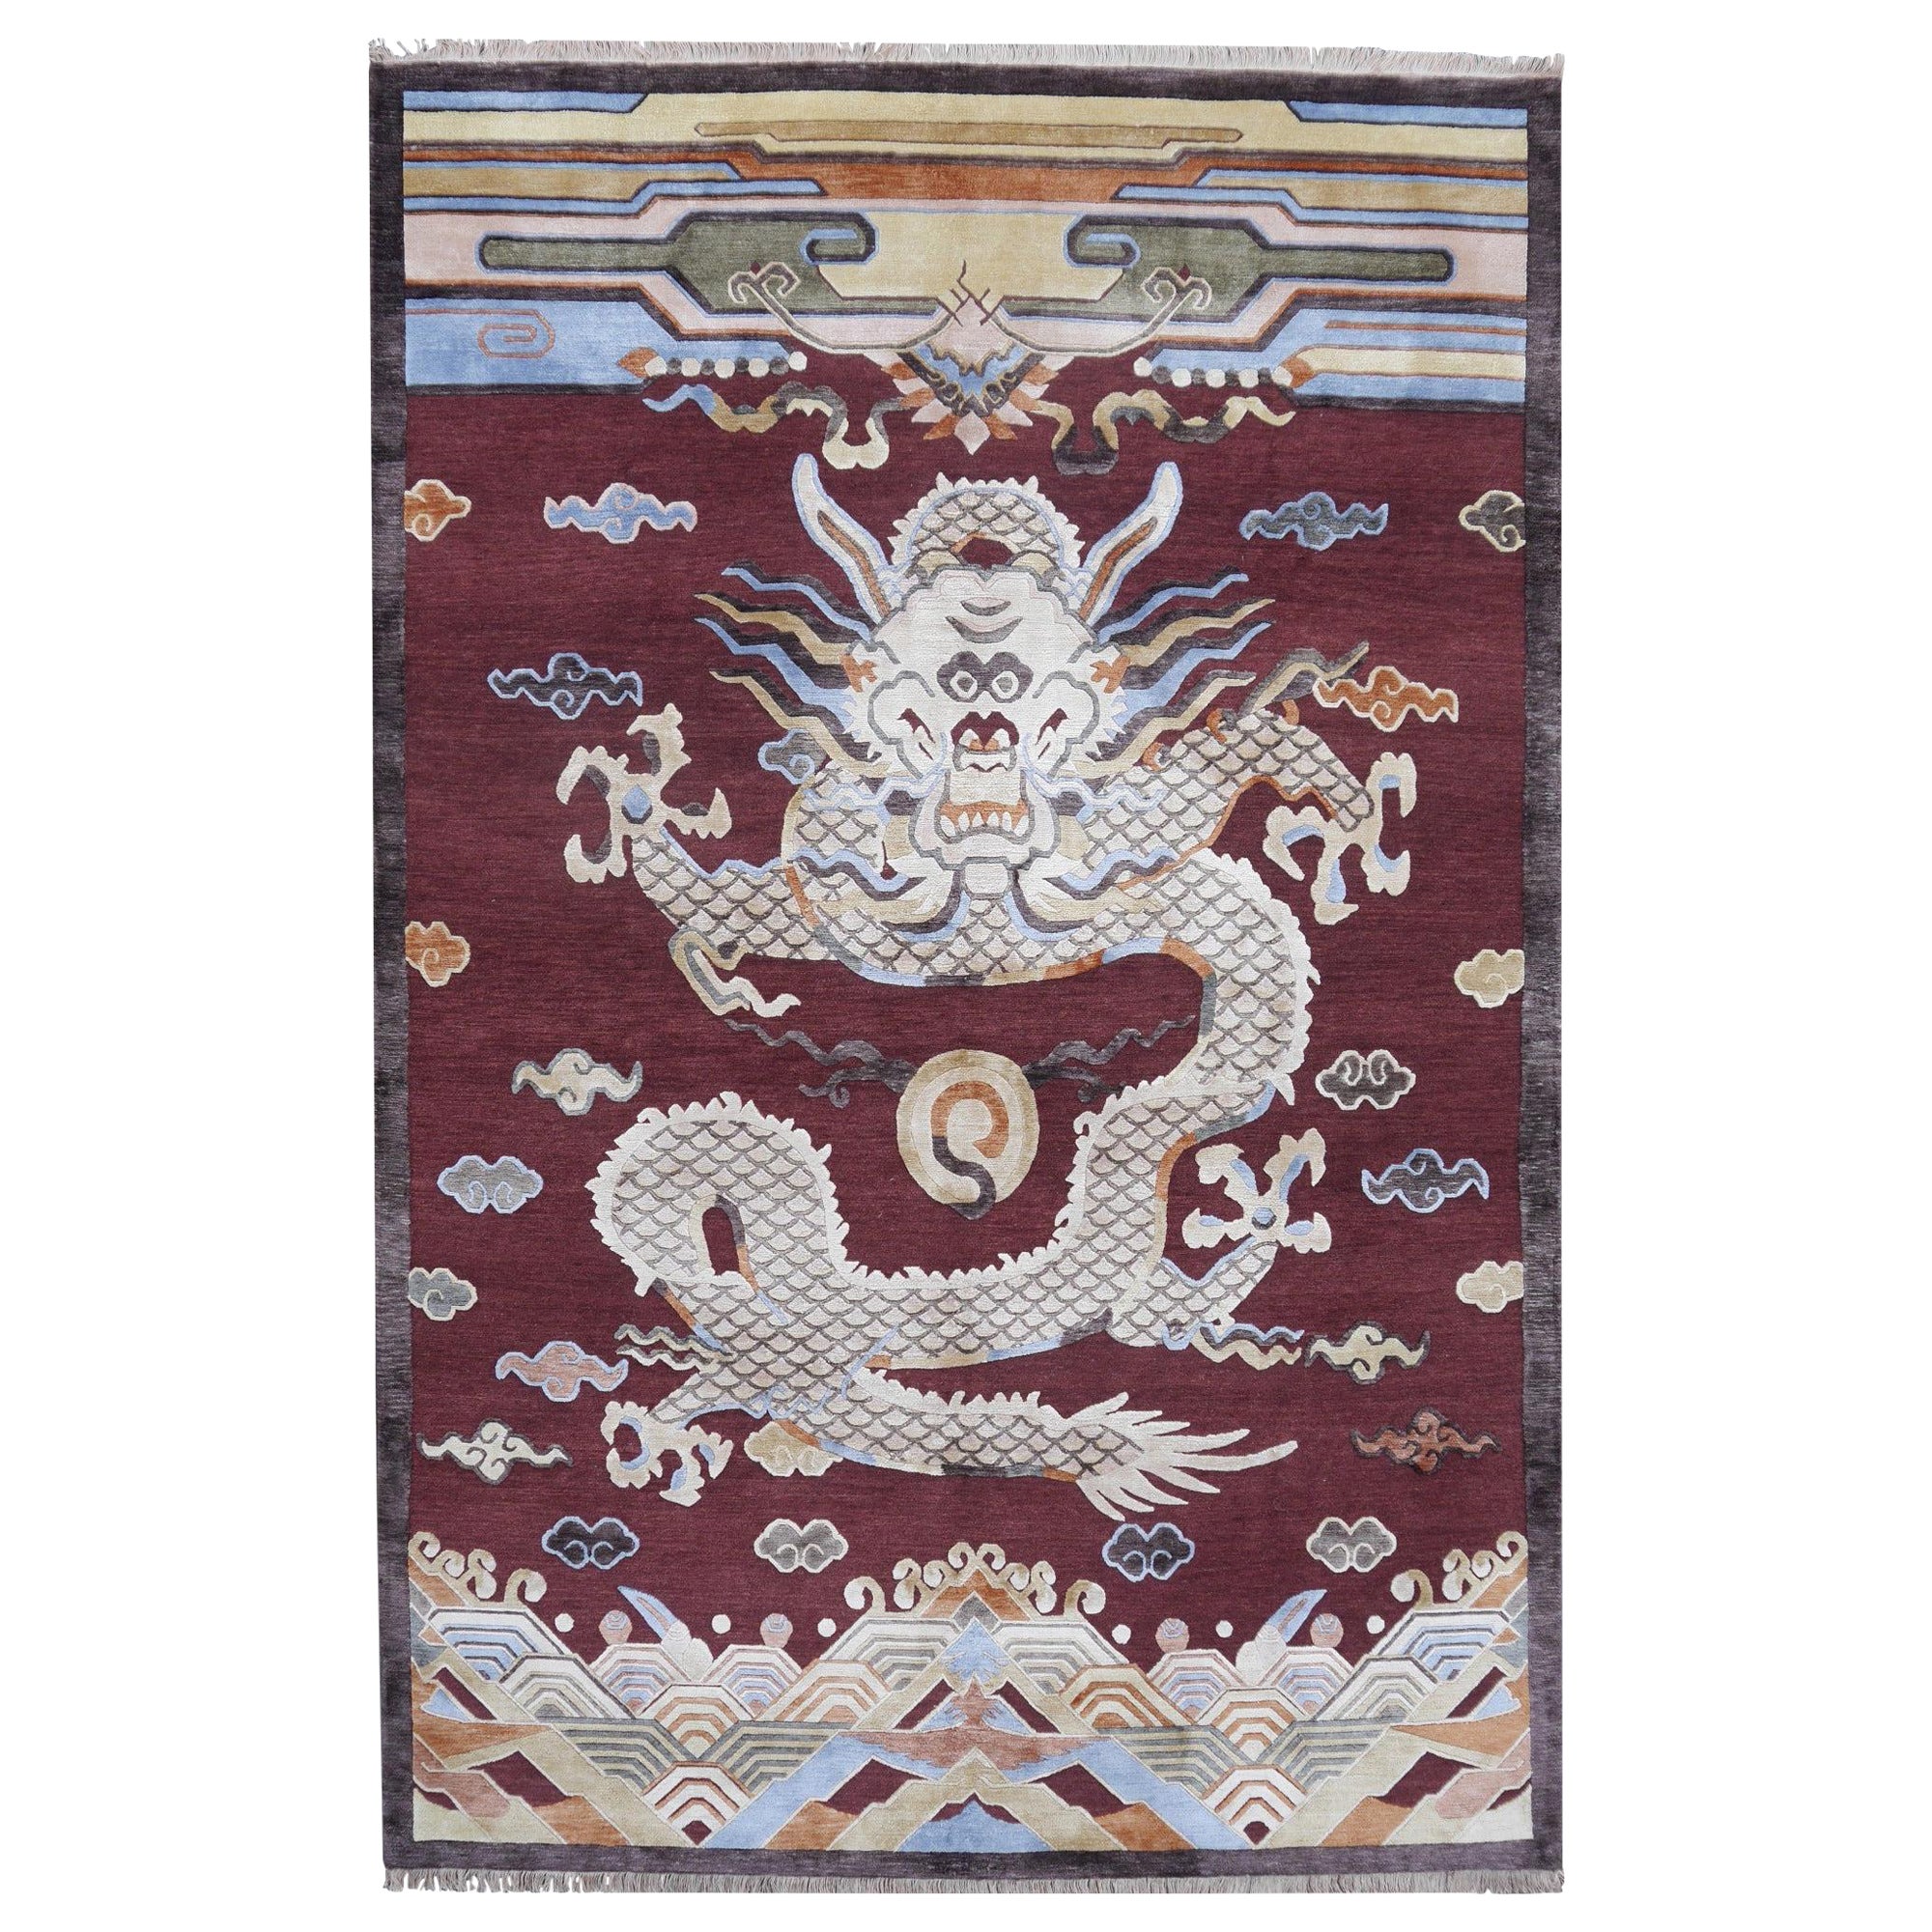 Tibetan Dragon Rug Wool Silk in Style of Imperial Chinese Kansu Design Carpets